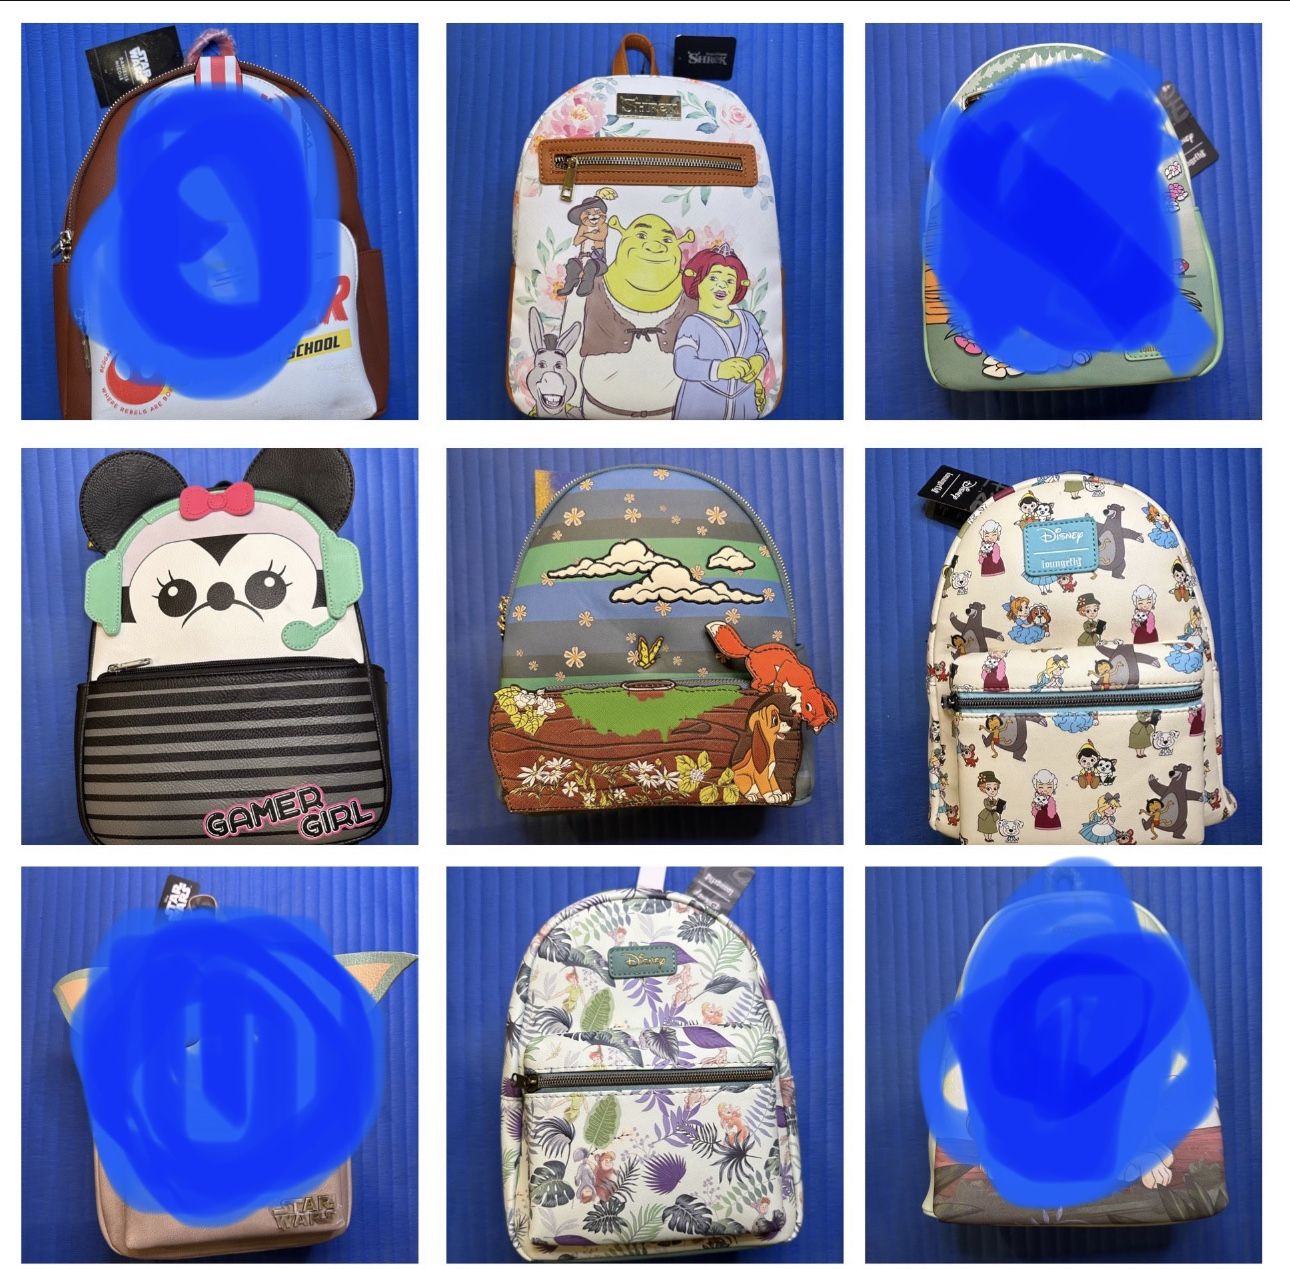  Assortment of Mini Backpacks (Loungefly, Danielle Nicole, Bioworld) -ALL NWTs  - $40 FIRM 